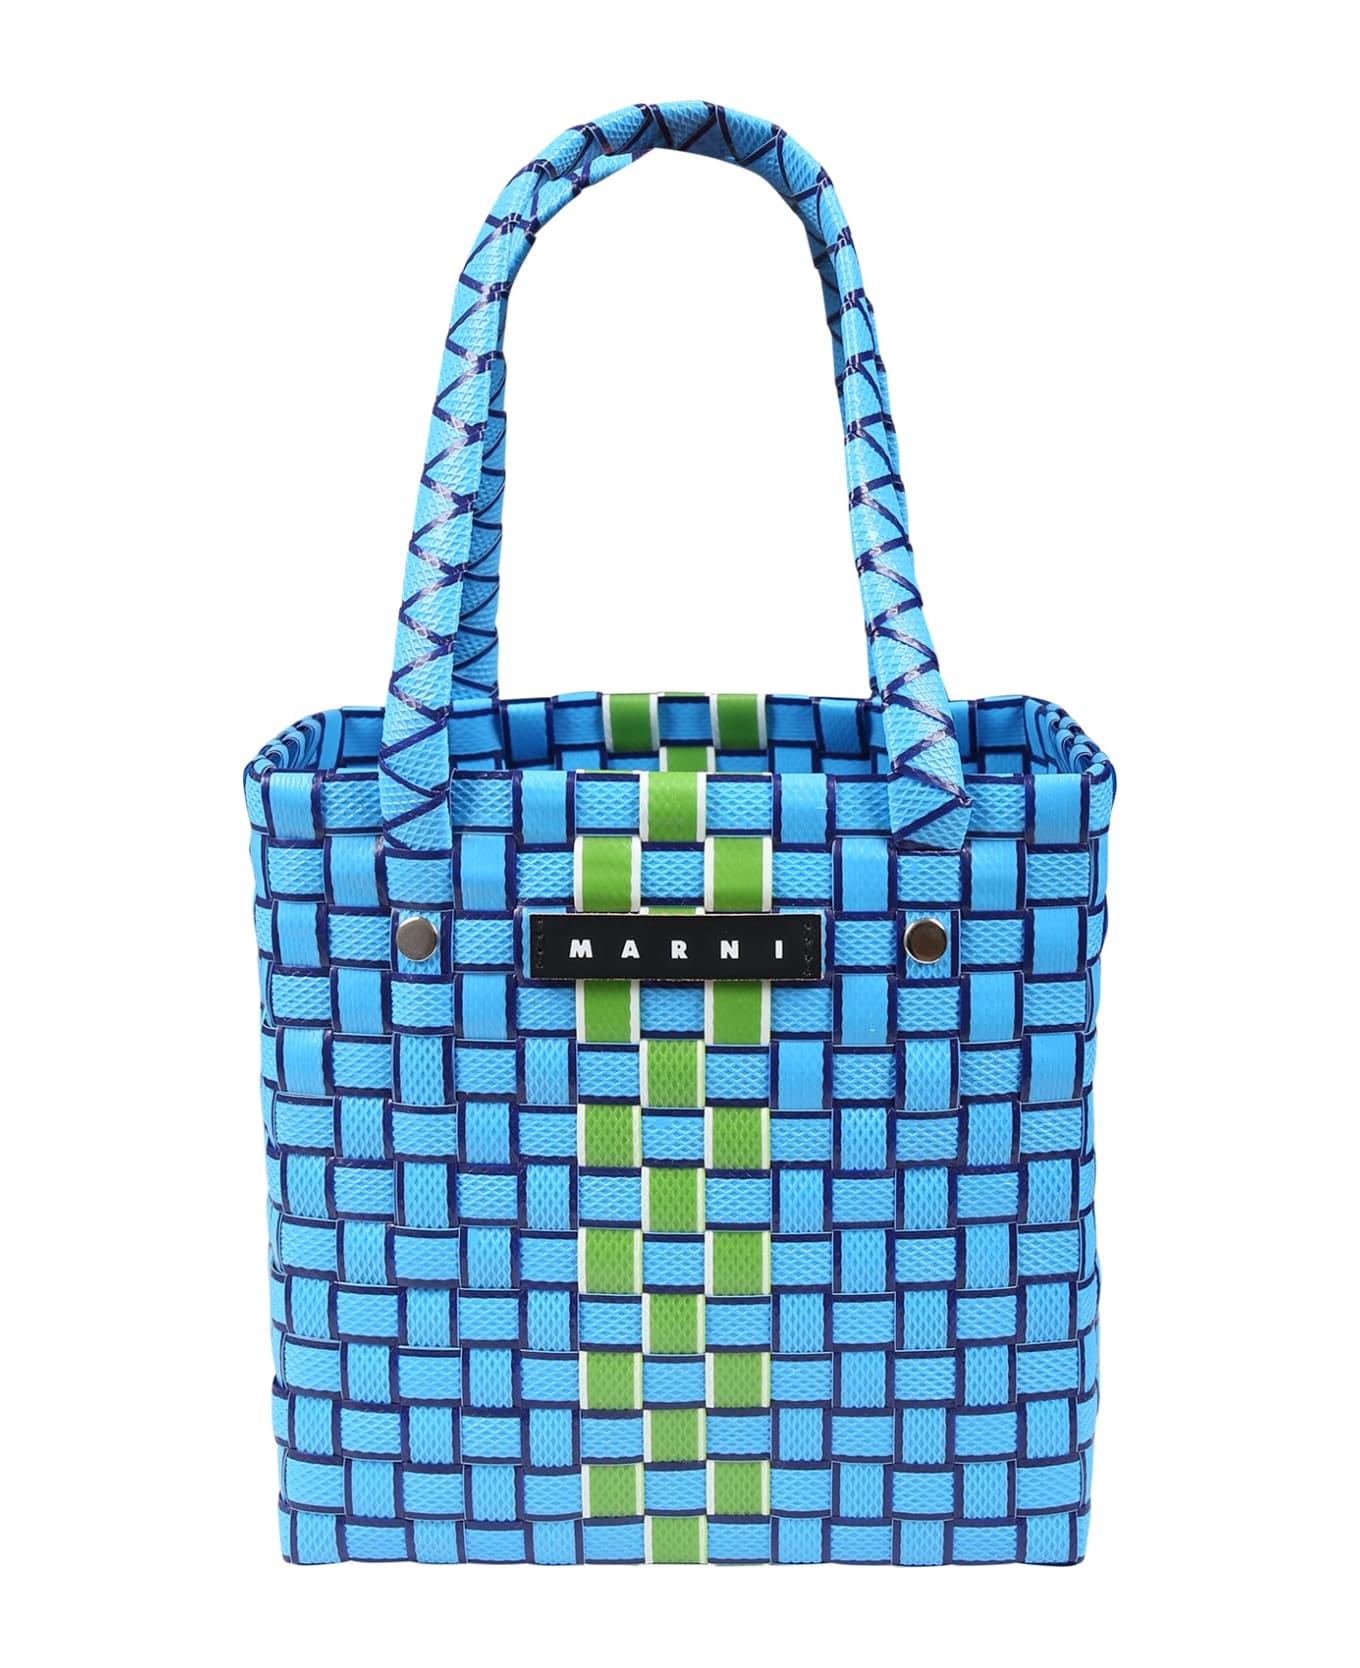 Marni Light Blue Bag For Girl With Knitted - Light Blue